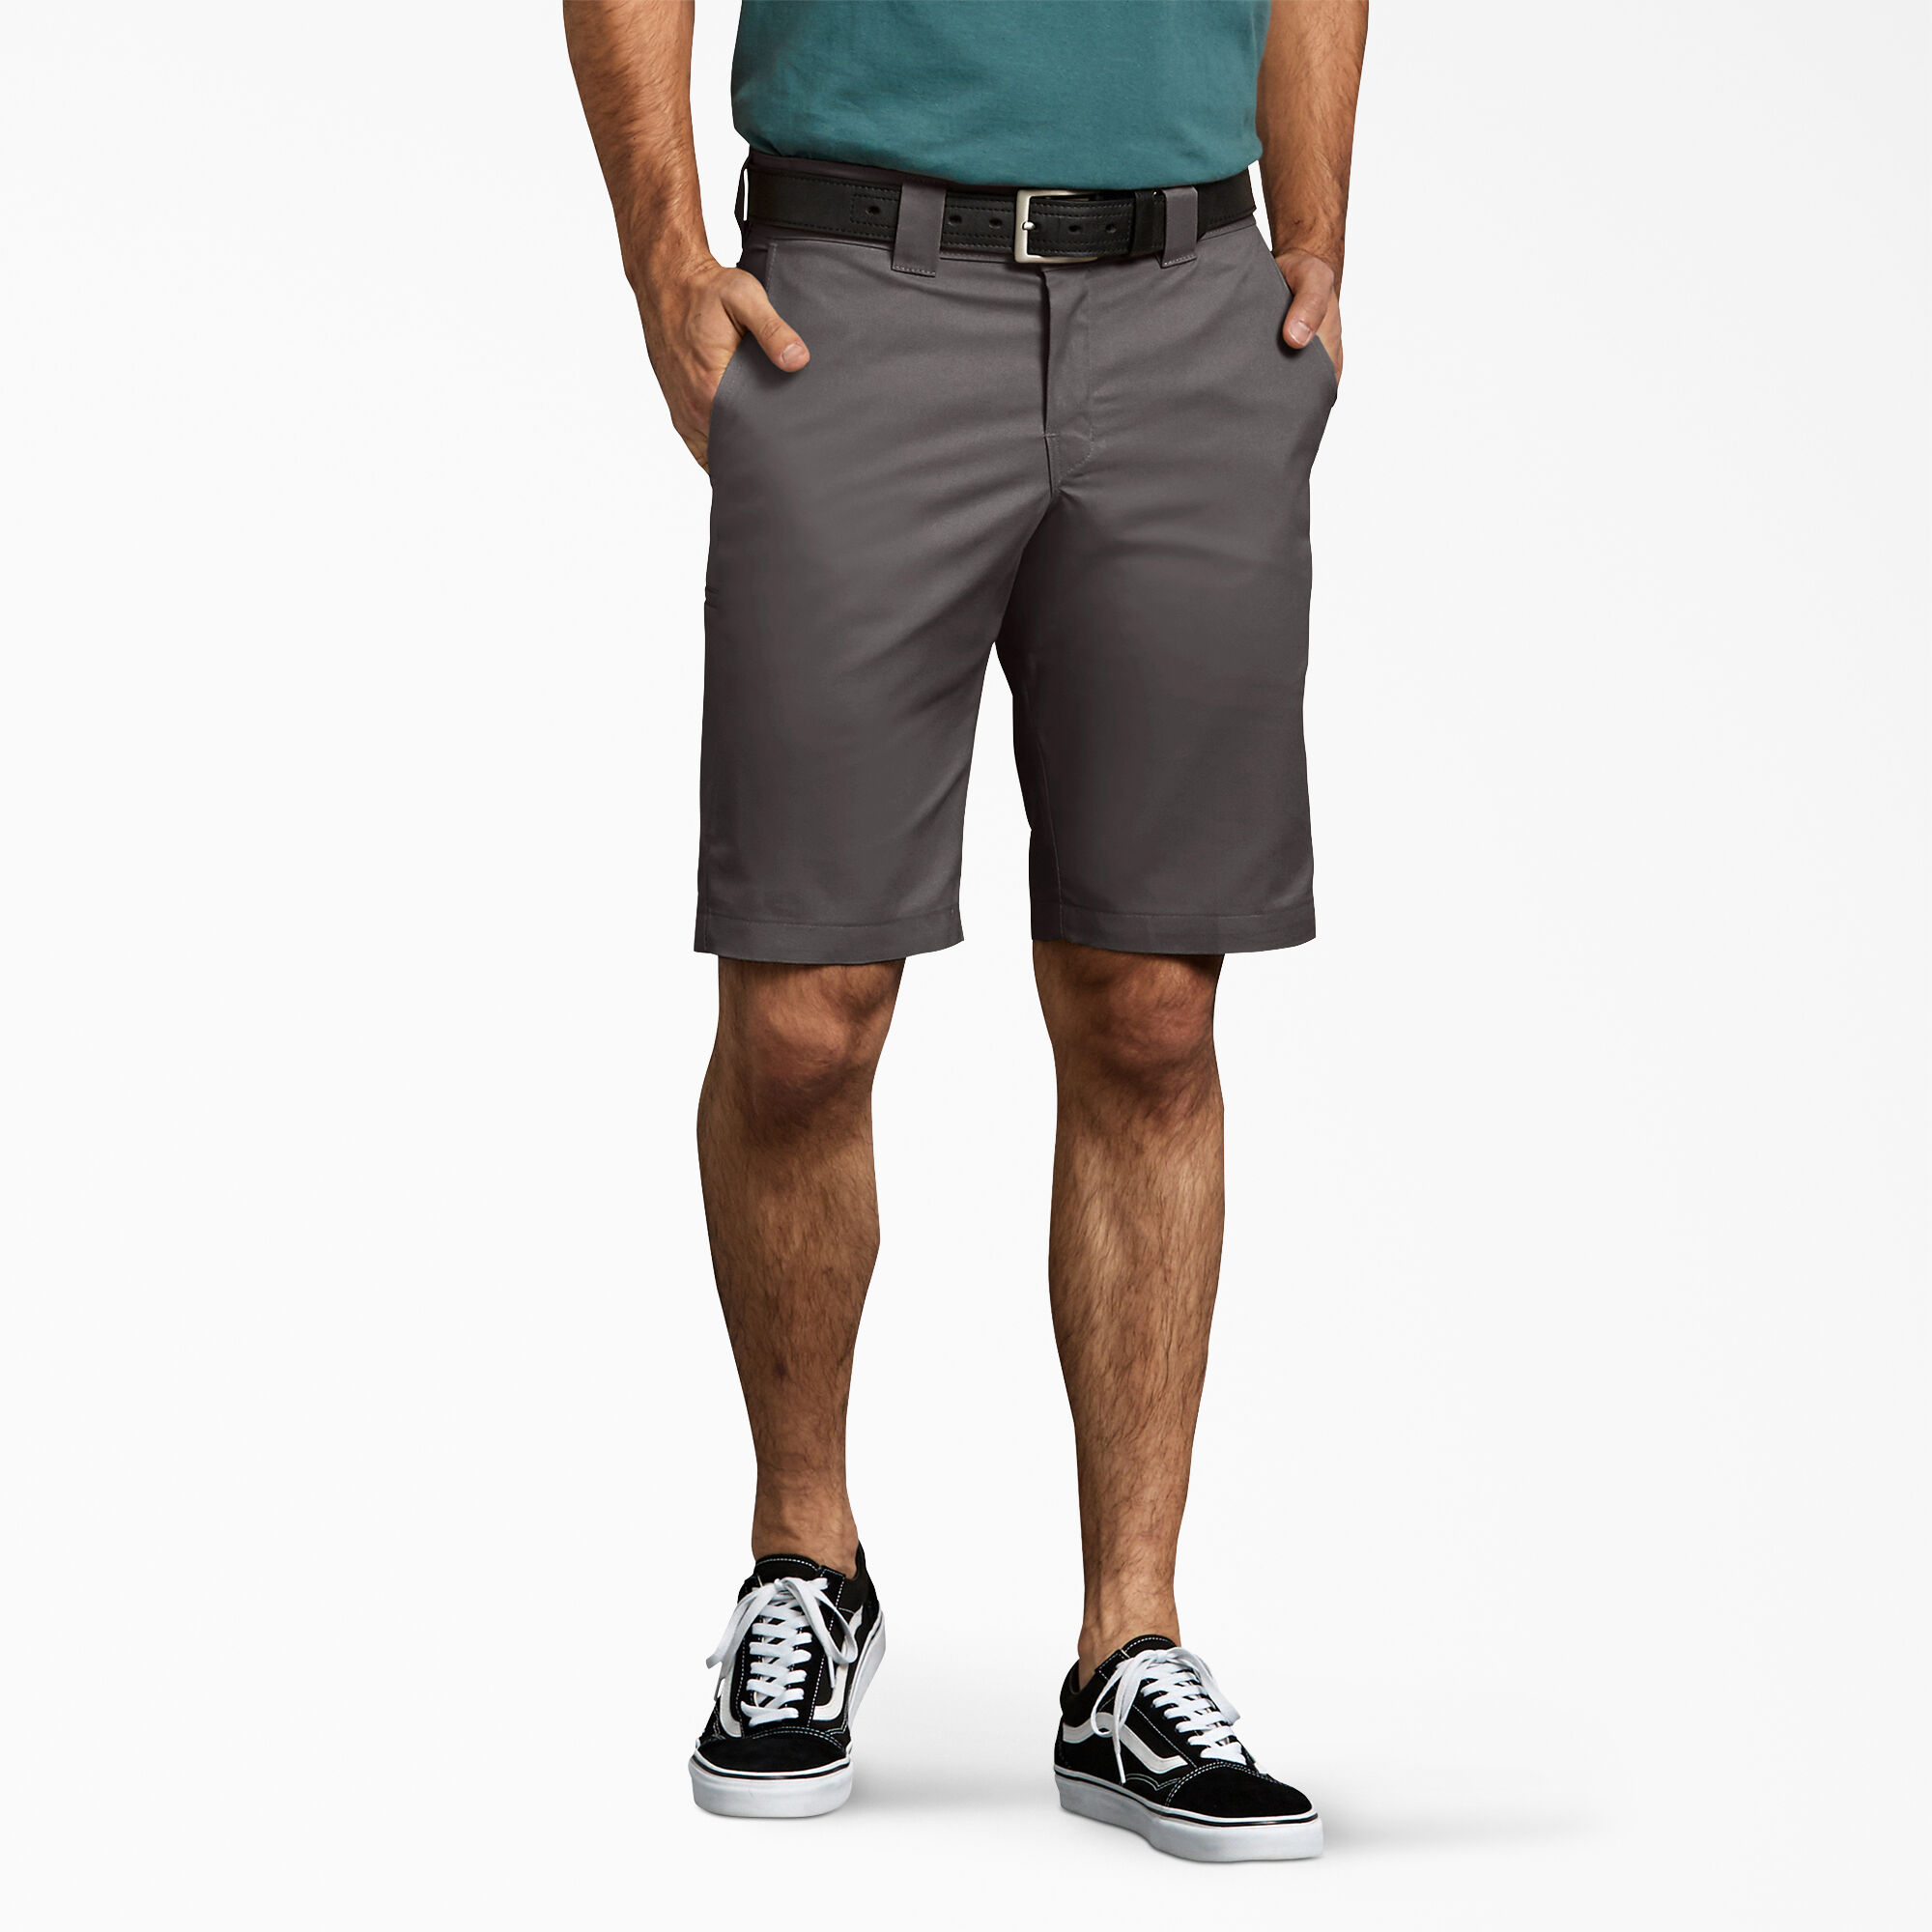 Men's Shorts - Work, Casual, and Uniform Shorts | Dickies